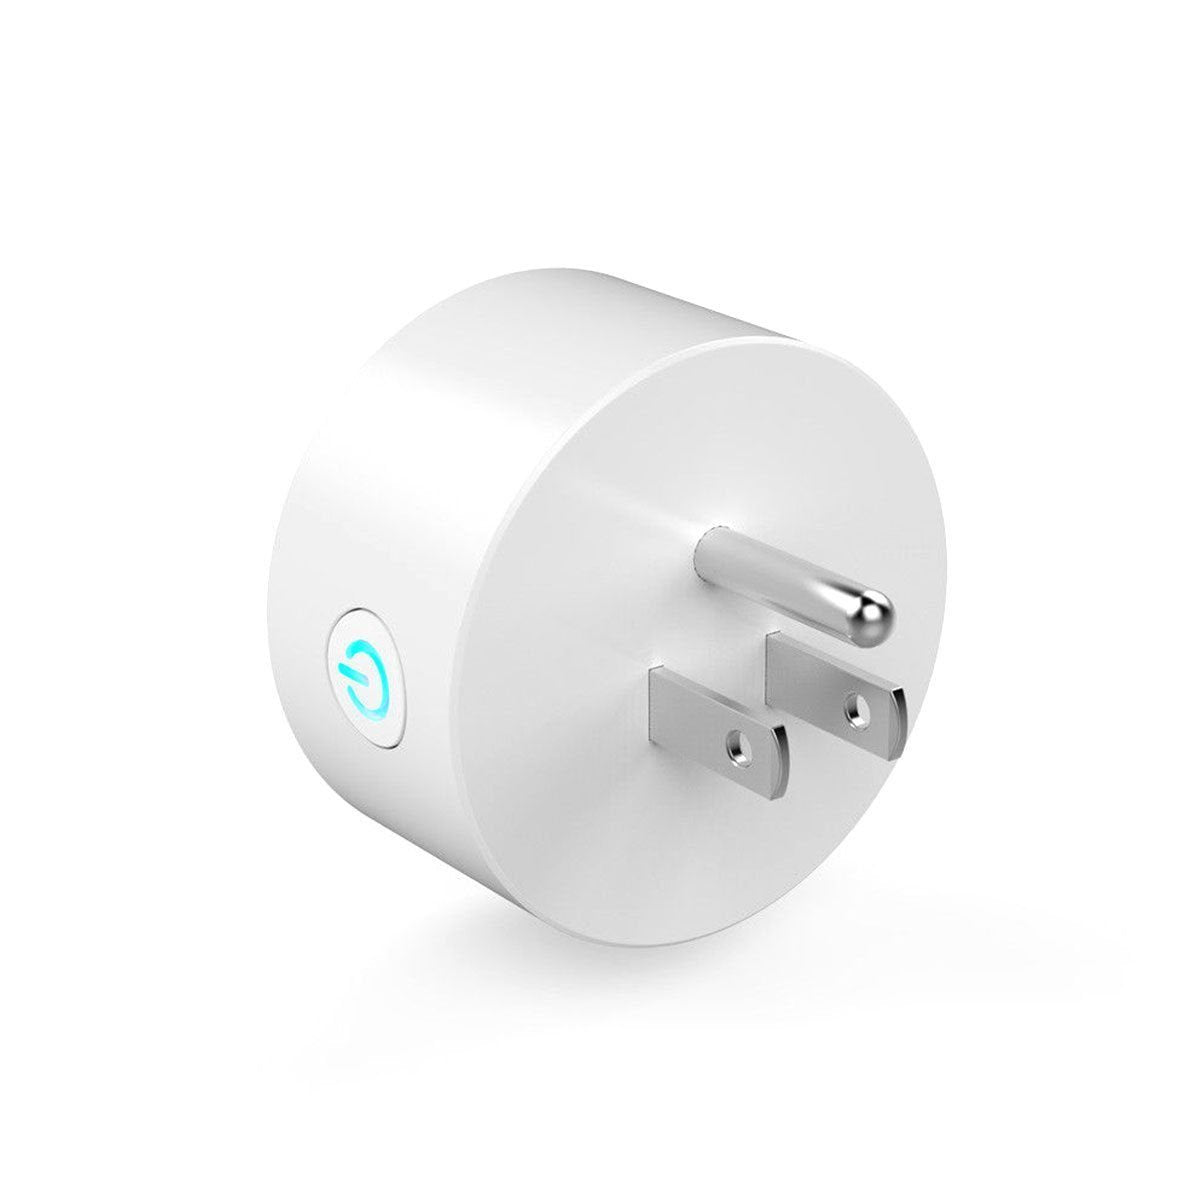 2 Packs Mini Smart Wifi Plug Outlet – LinkStyle